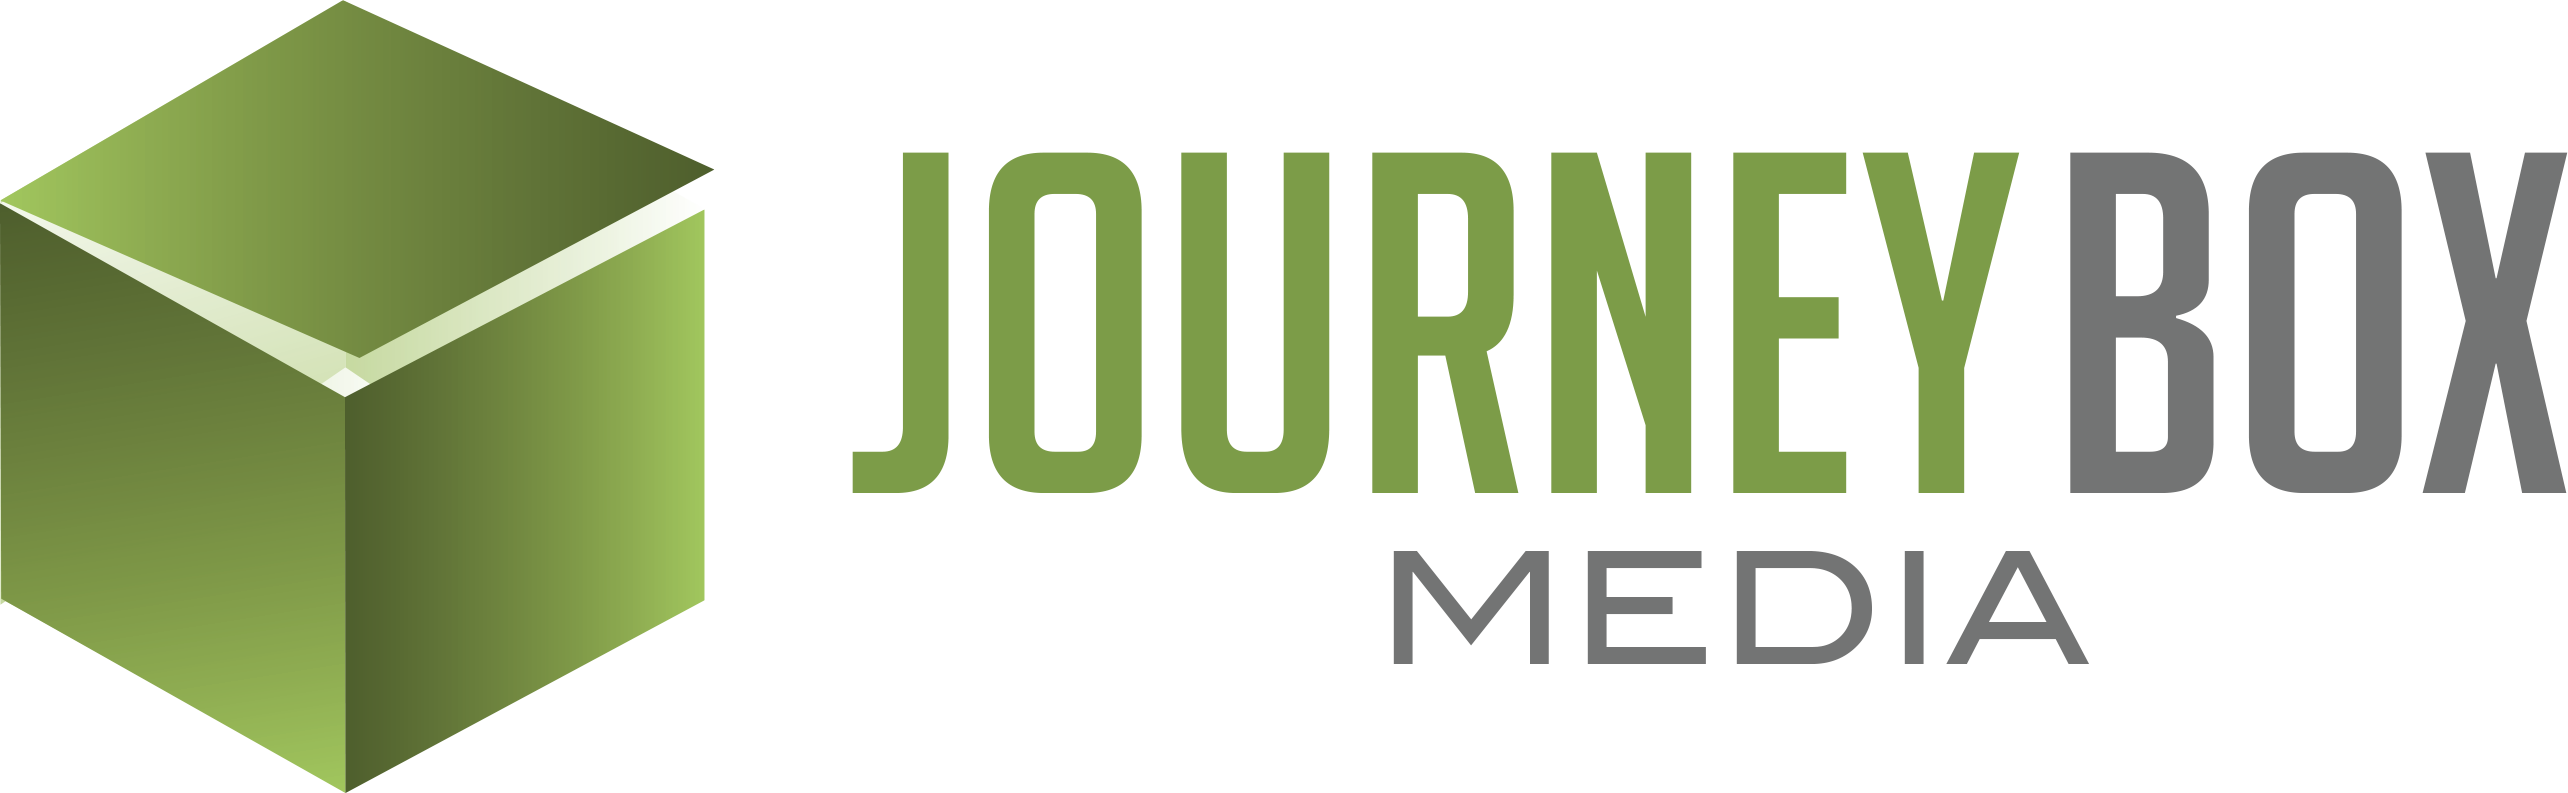 Journey Box Media